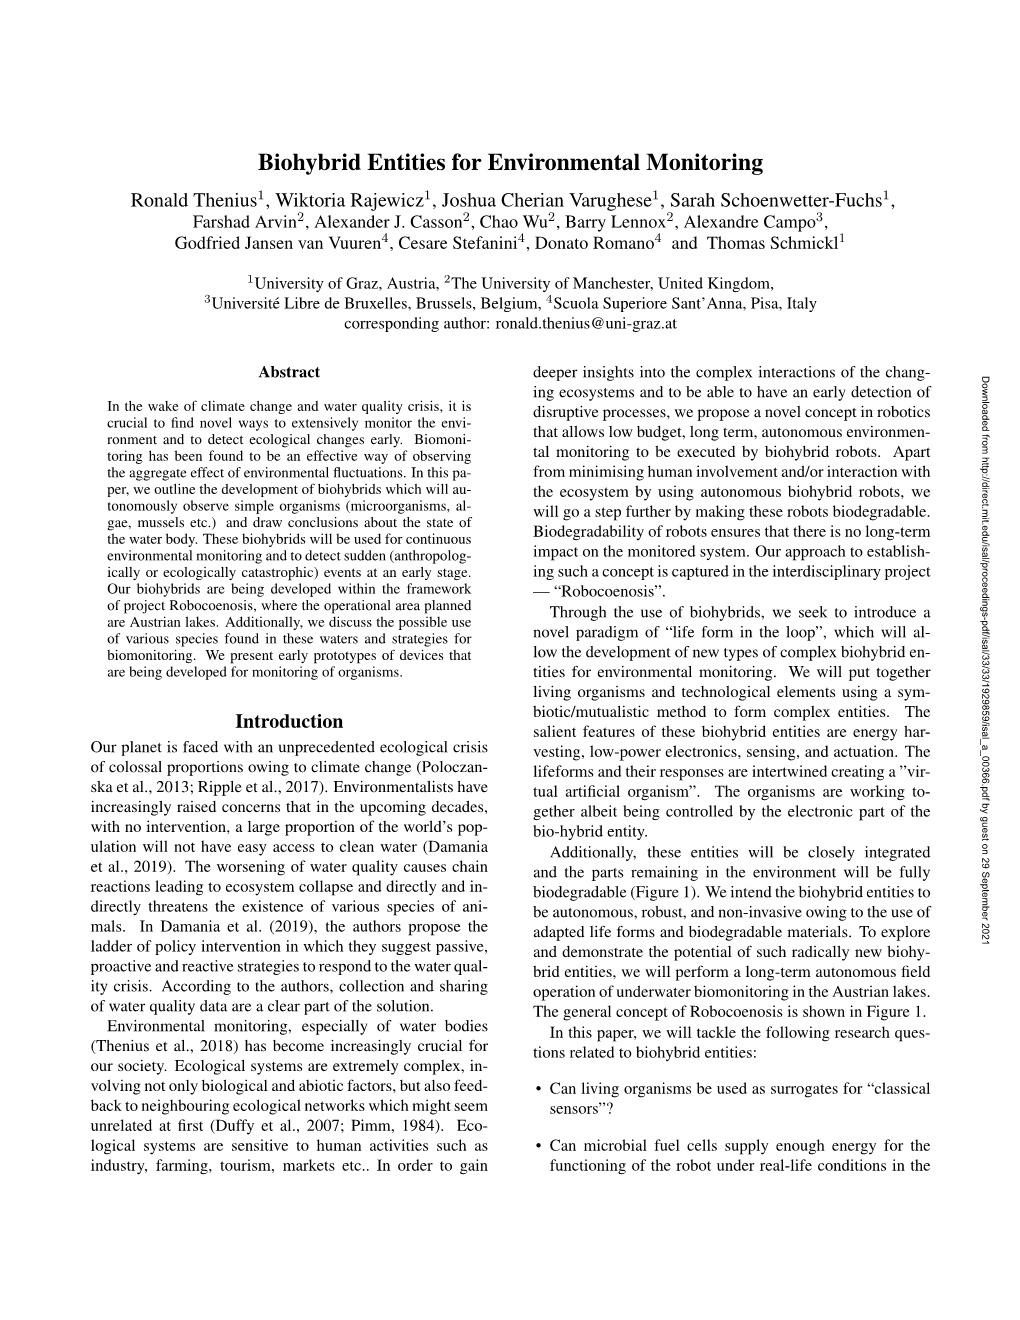 Biohybrid Entities for Environmental Monitoring Ronald Thenius1, Wiktoria Rajewicz1, Joshua Cherian Varughese1, Sarah Schoenwetter-Fuchs1, Farshad Arvin2, Alexander J